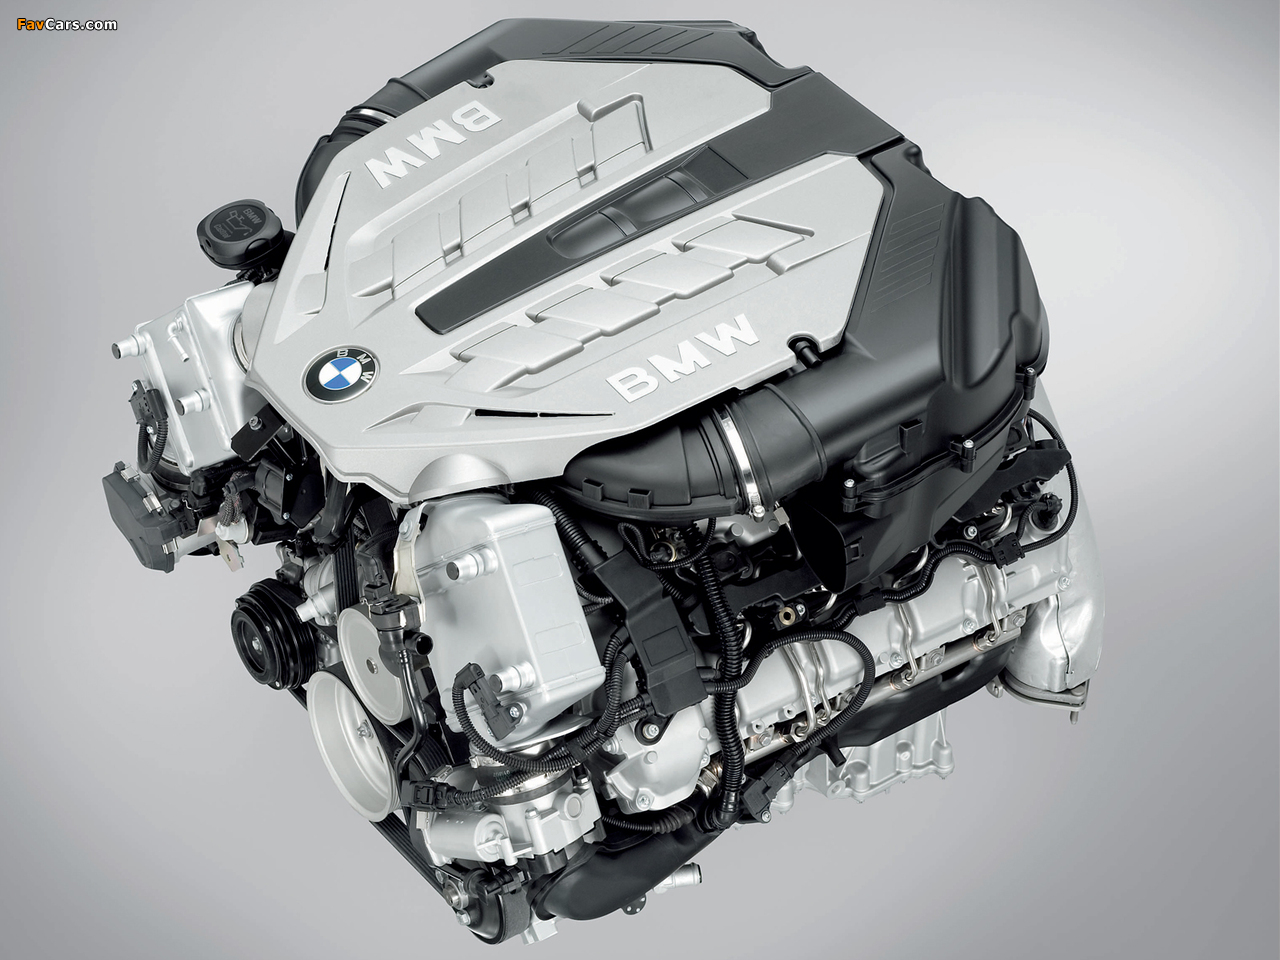 Bmw x6 двигатели. BMW x6 мотор. Двигатель BMW x6m. BMW x6 3.5i, 2008 двигатель. Двигатель БМВ х6 3.0 дизель.